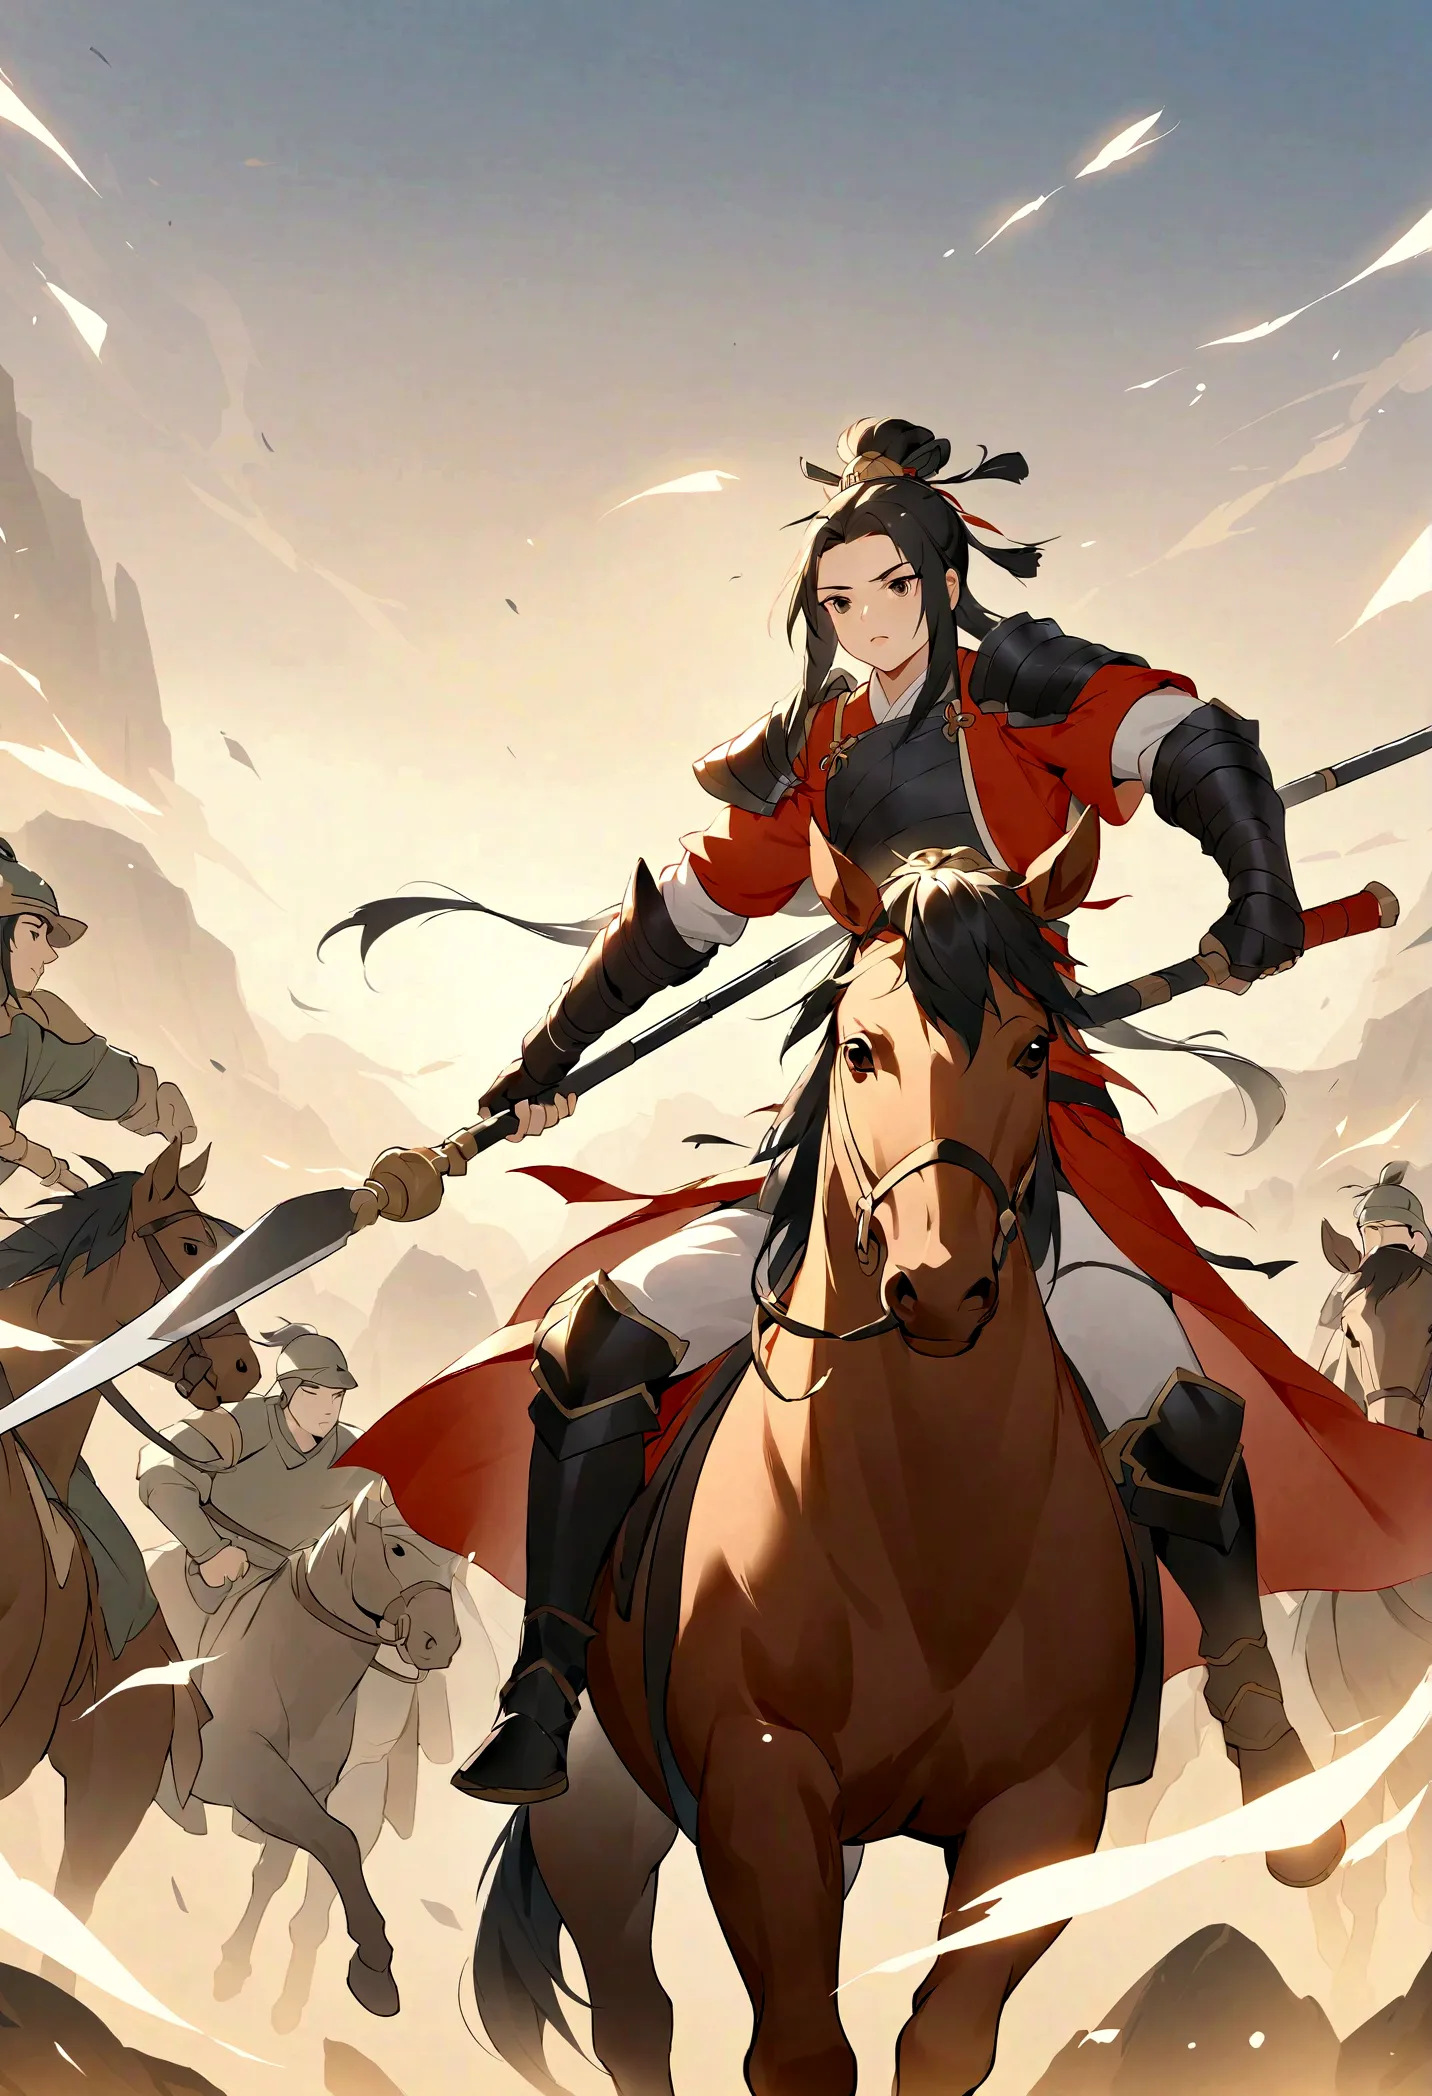 yaya，Three Kingdoms, Zhao Zilong, horse riding, wielding spears, Heroic and fearless, Wear armor, Behind it is the battlefield, ...